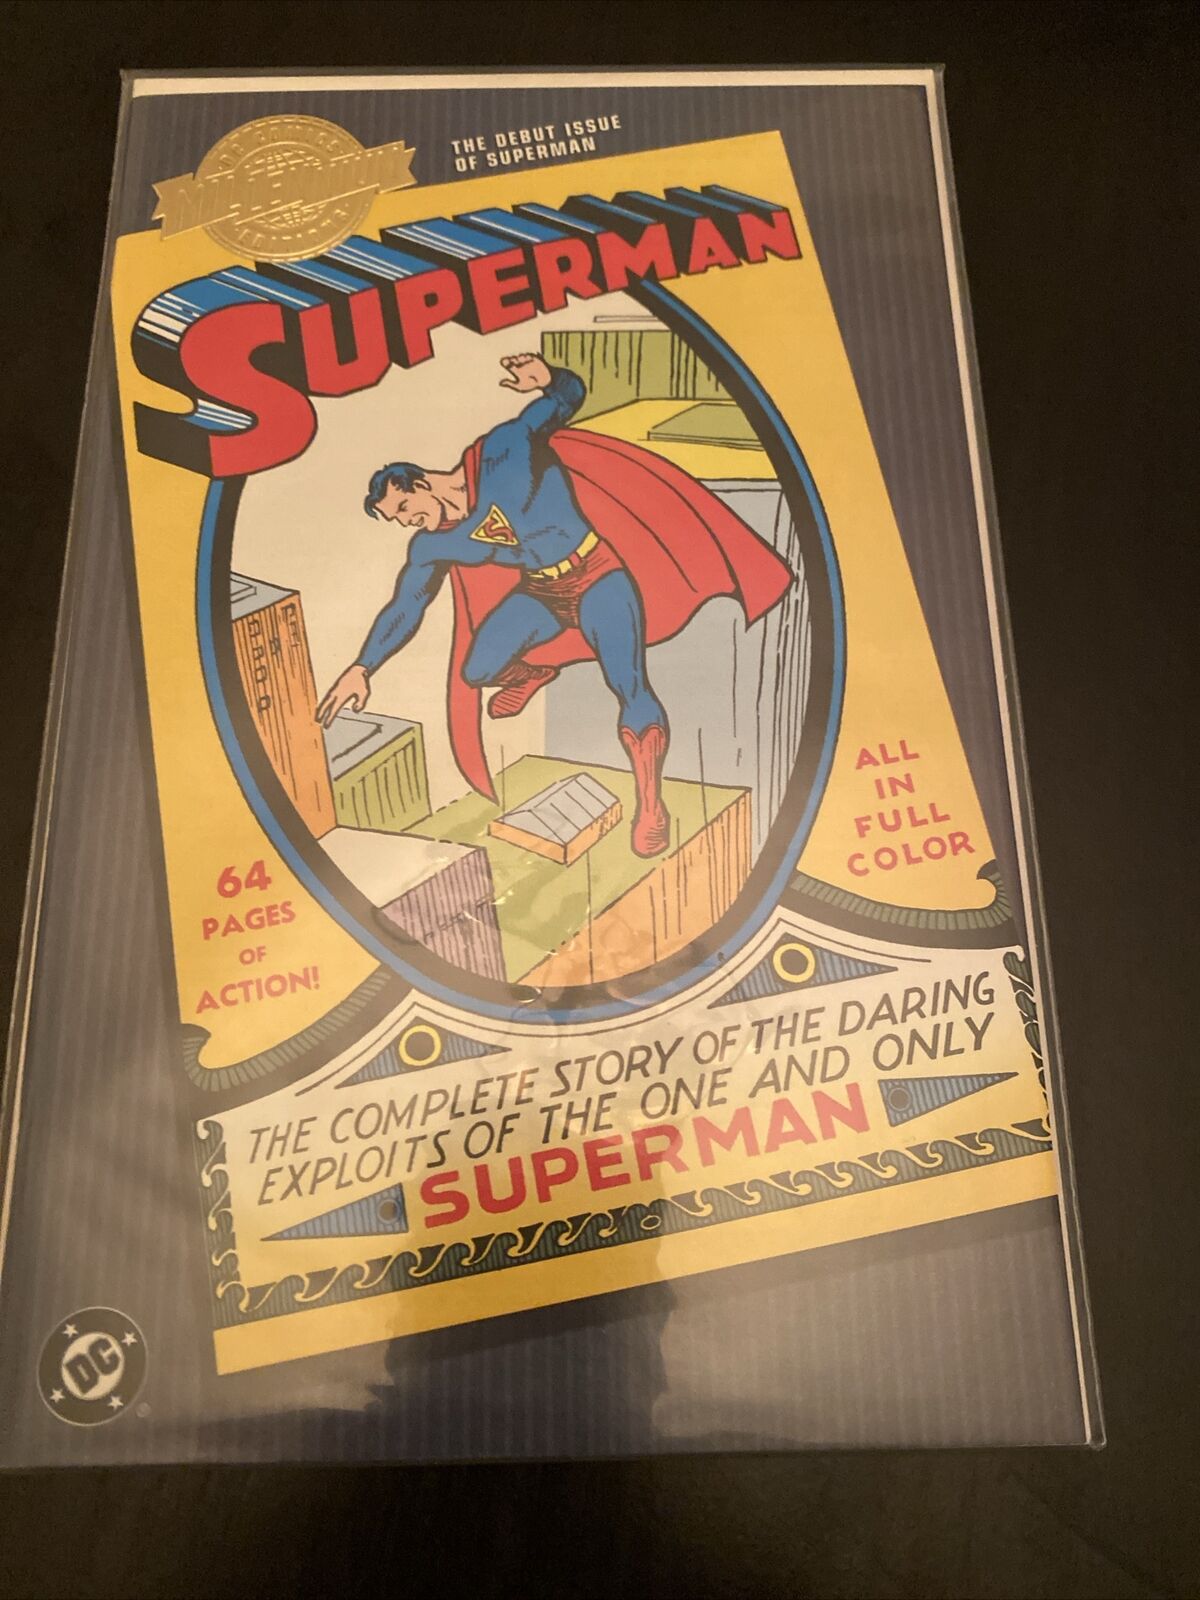 DC COMICS MILLENNIUM EDITION SUPERMAN #1 1939 SERIES 2000